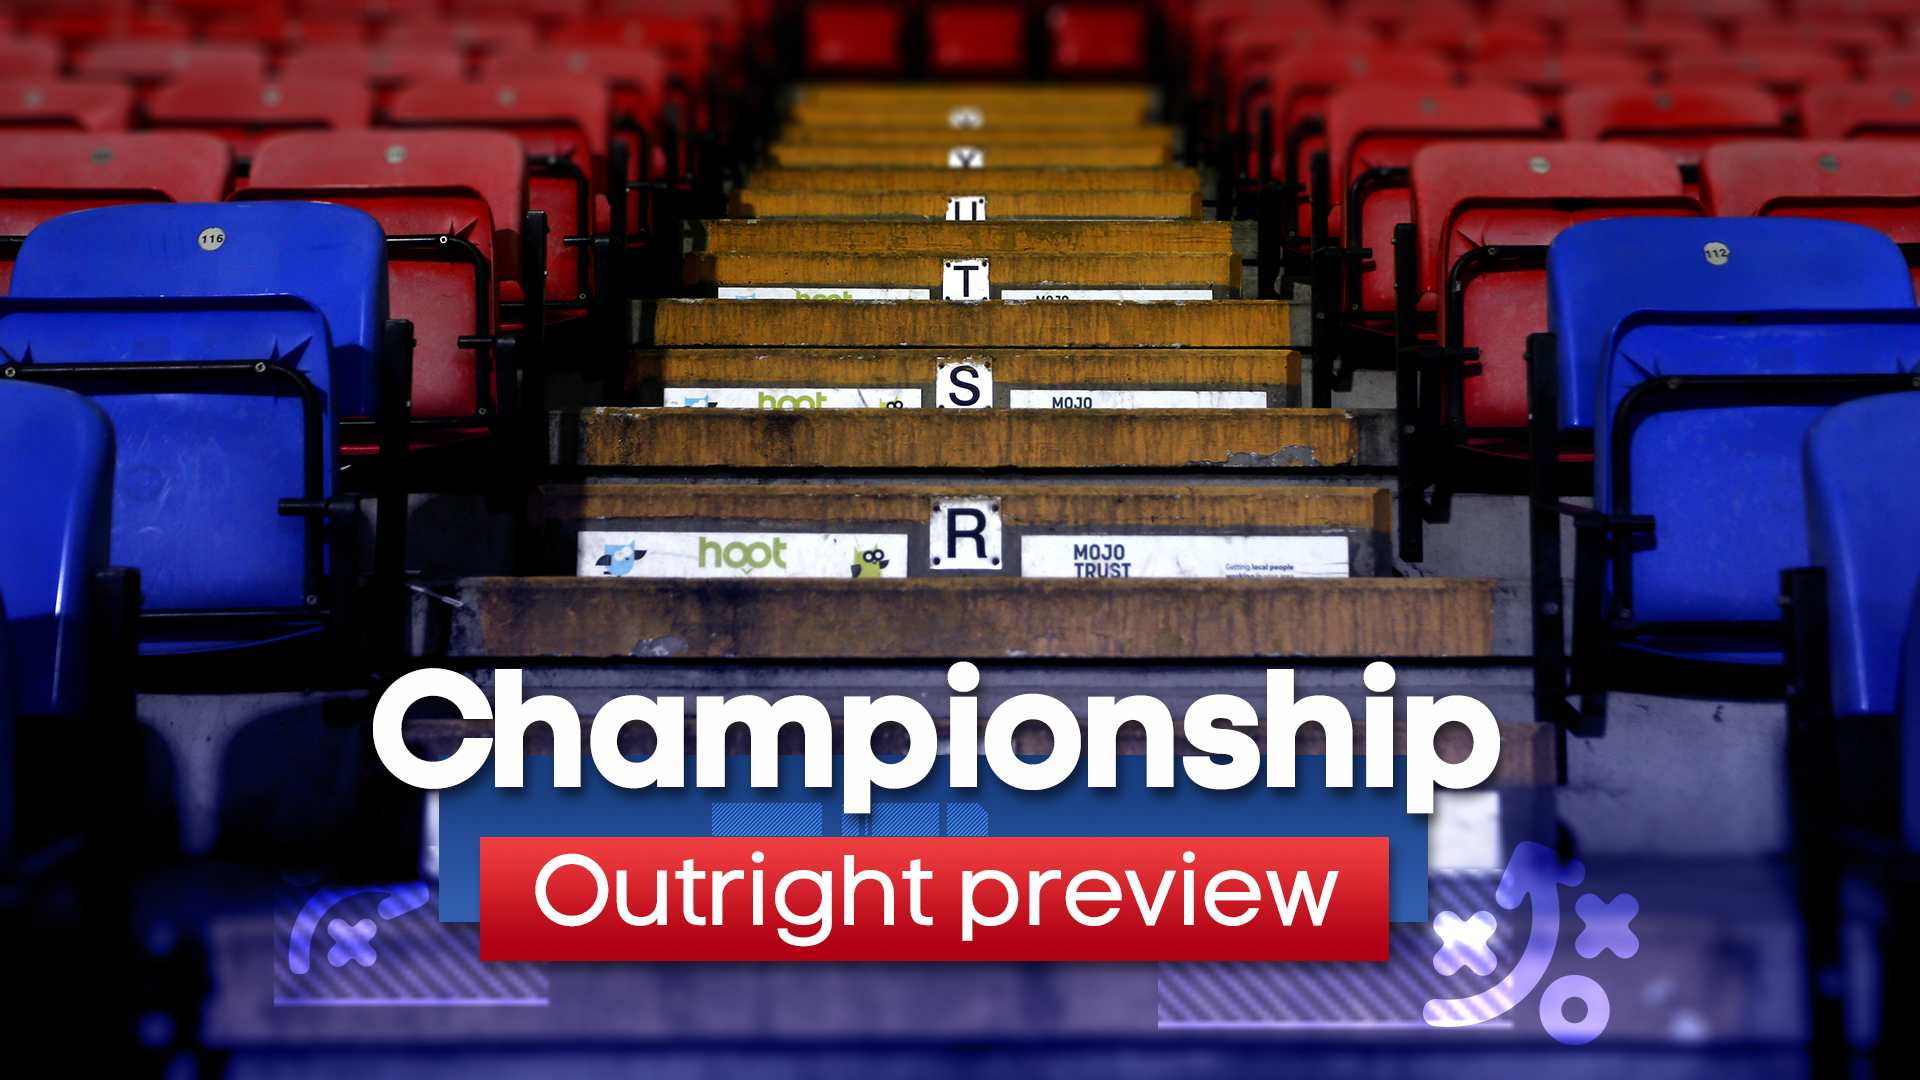 Sky Bet Championship 2018/19 - your big season preview